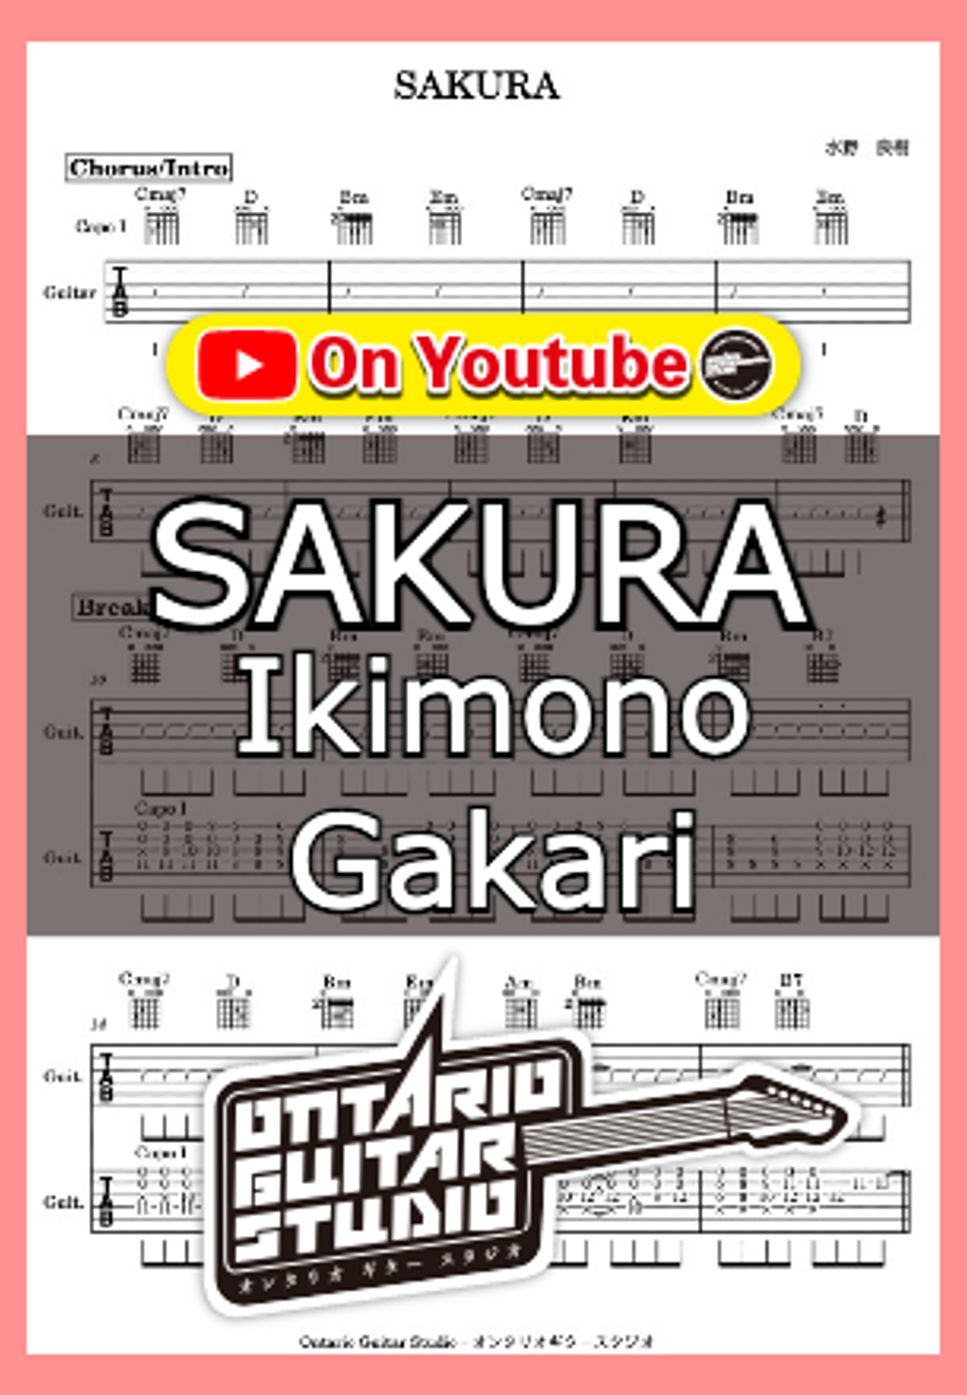 Ikimono Gakari - Sakura by Ontario Guitar Studio